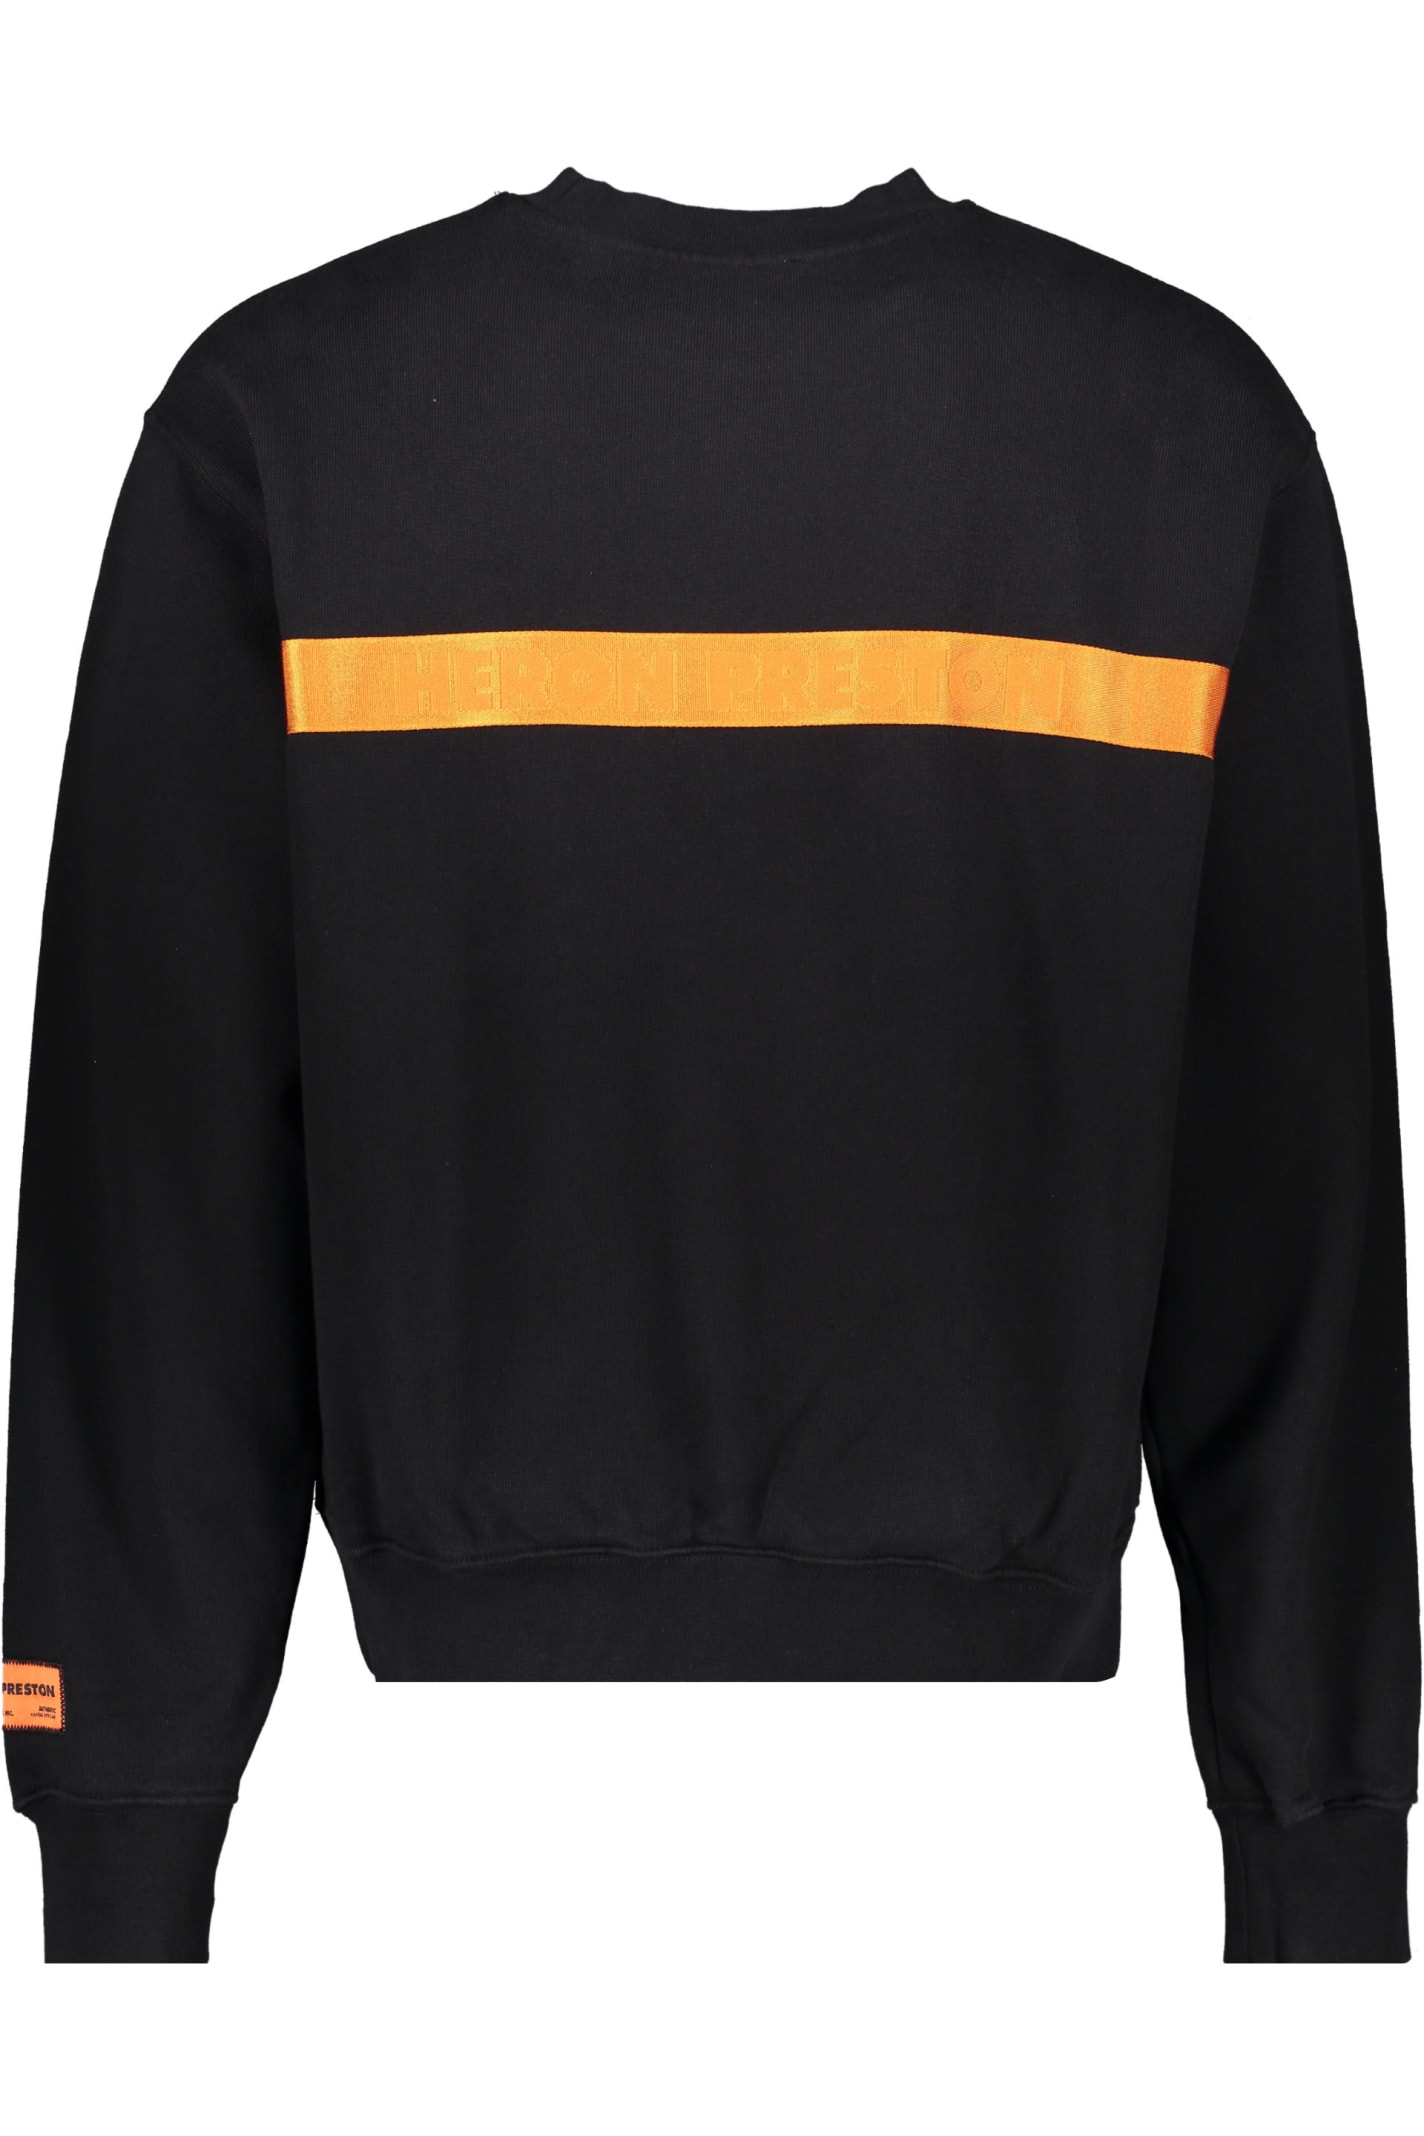 Shop Heron Preston Print Sweatshirt In Black